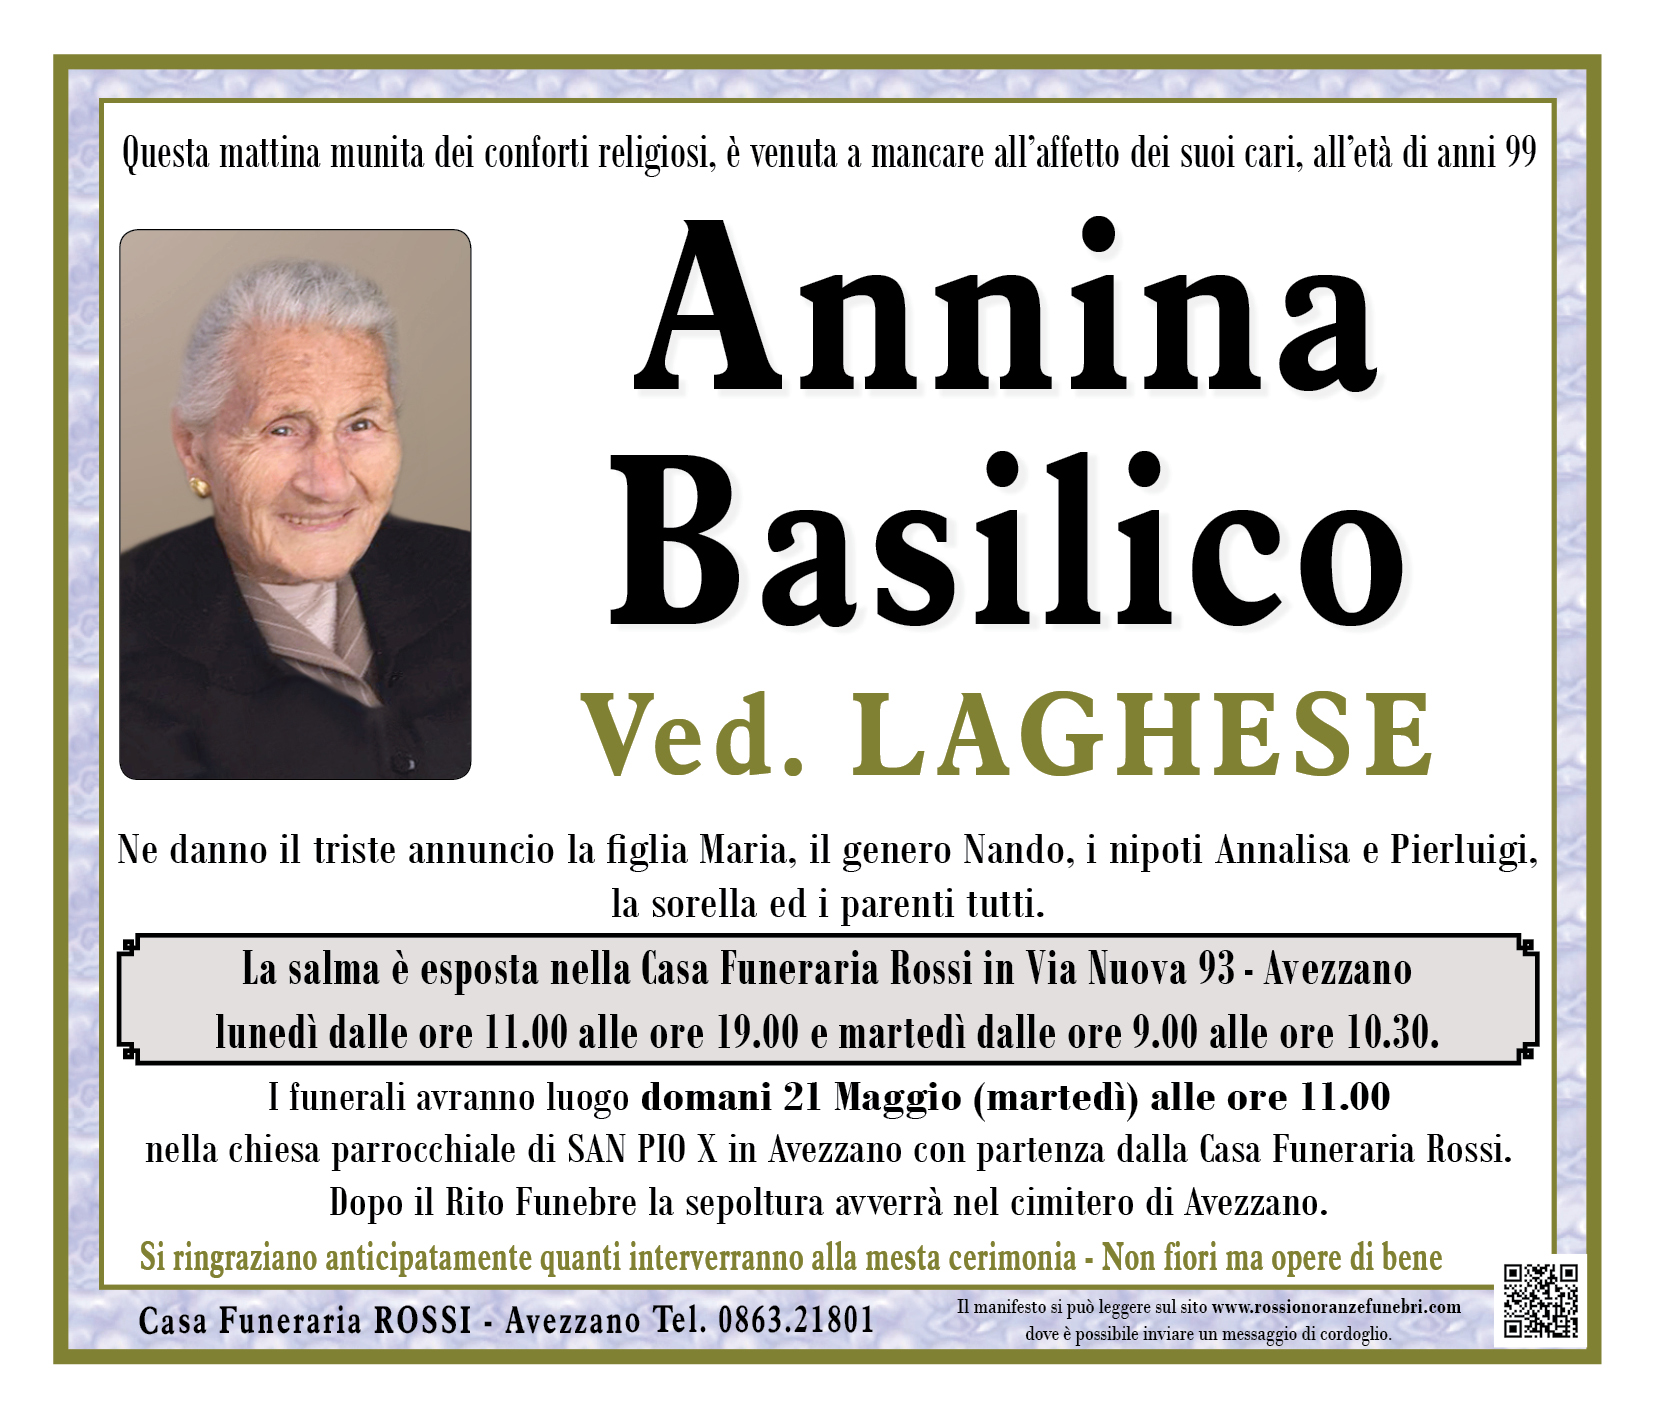 Annina Basilico